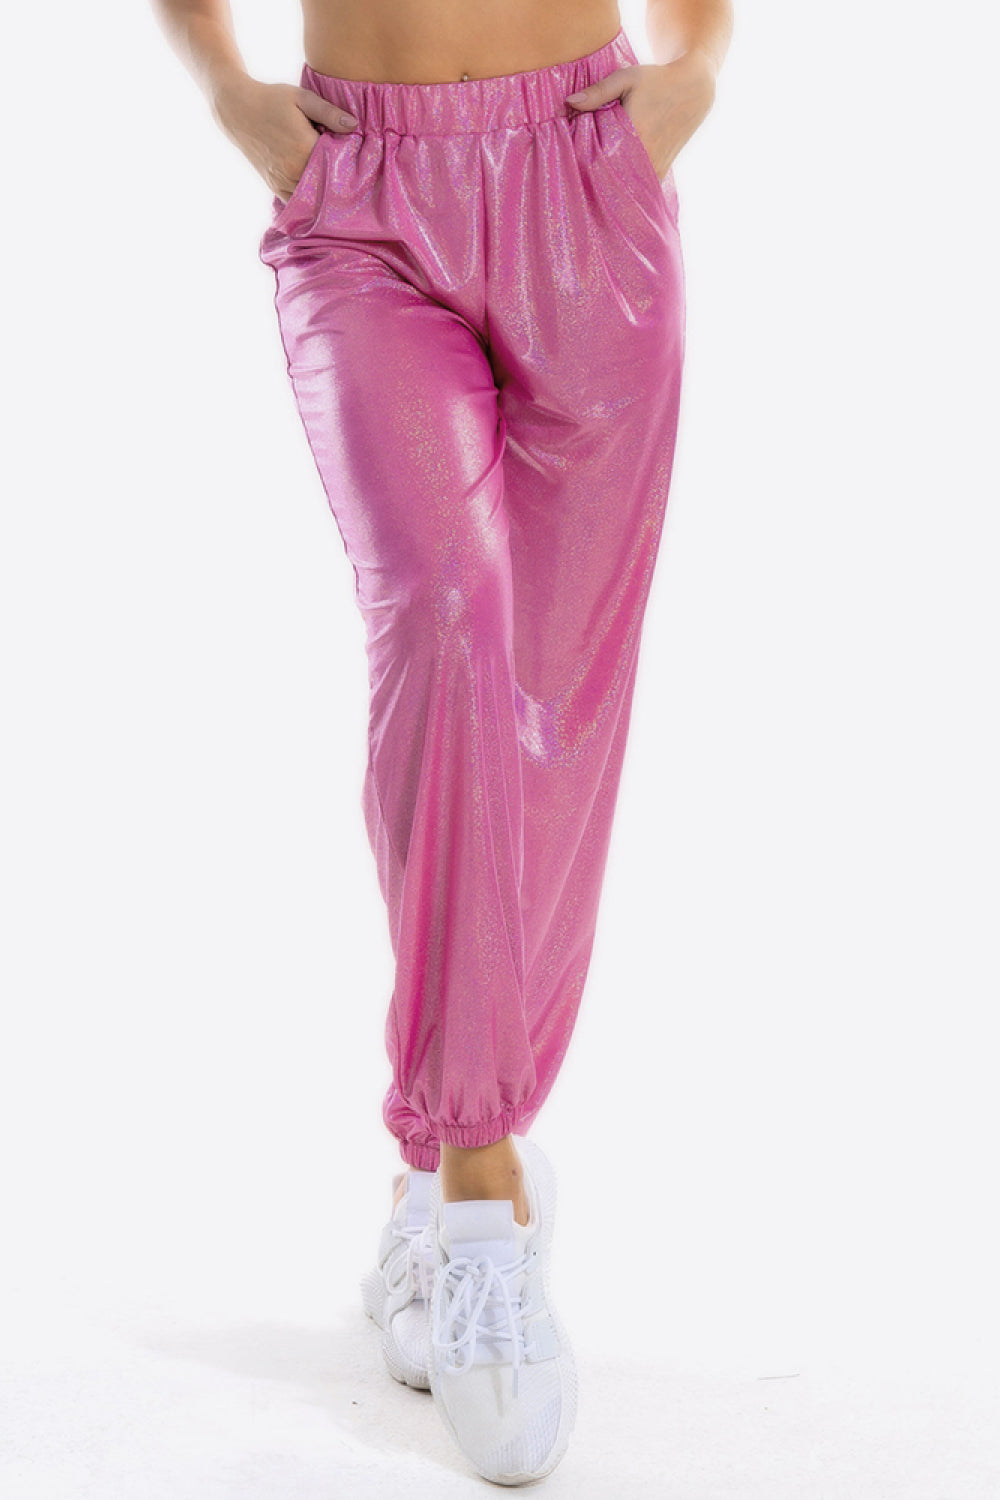 Glitter Elastic Waist Pants with Pockets - FunkyPeacockStore (Store description)